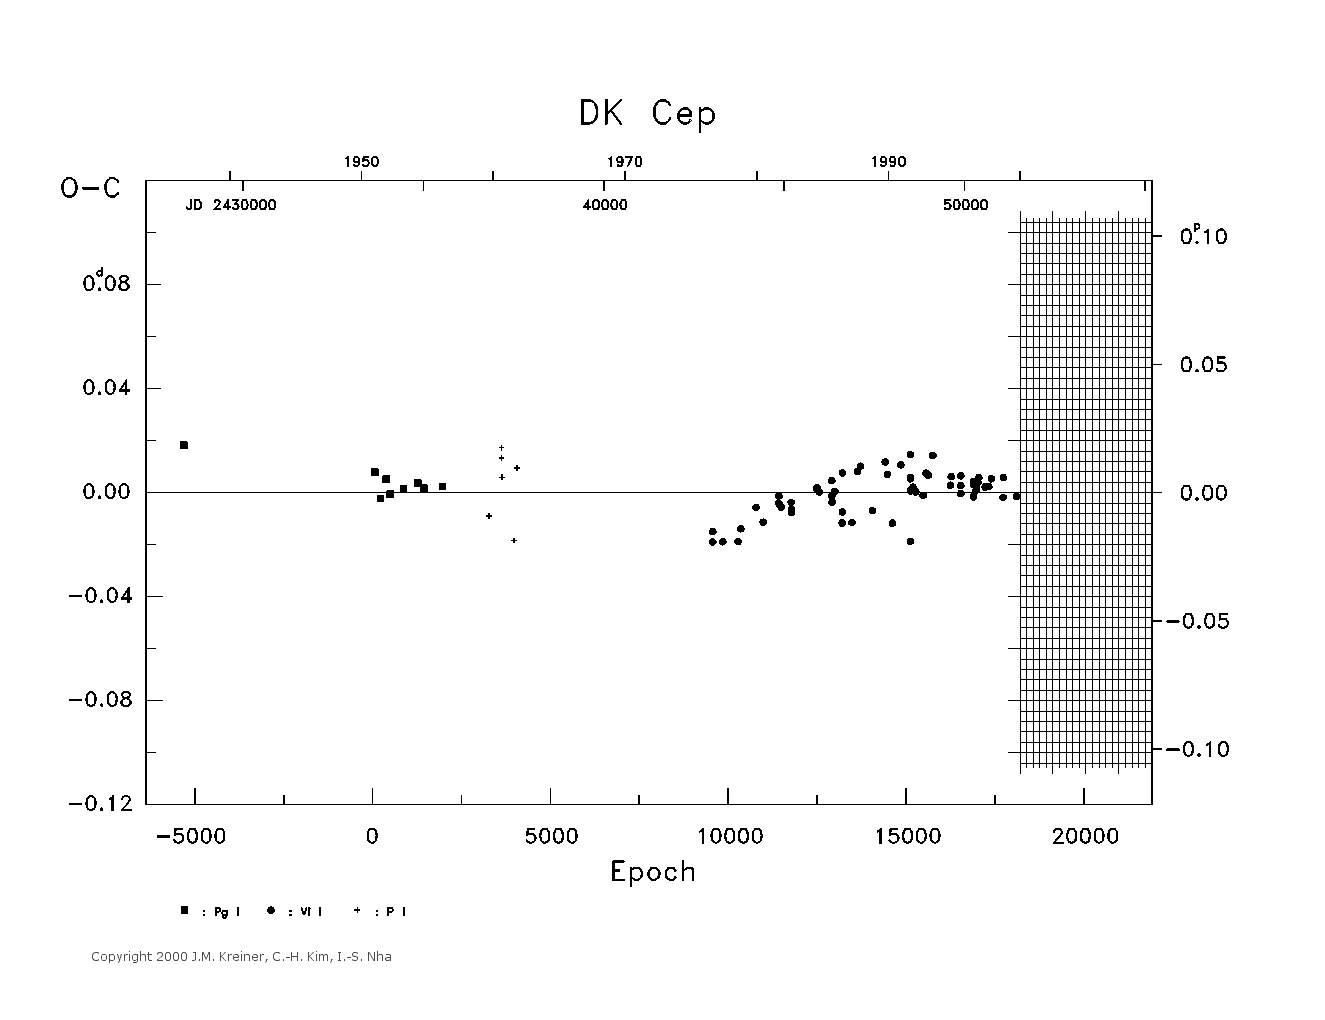 [IMAGE: large DK CEP O-C diagram]